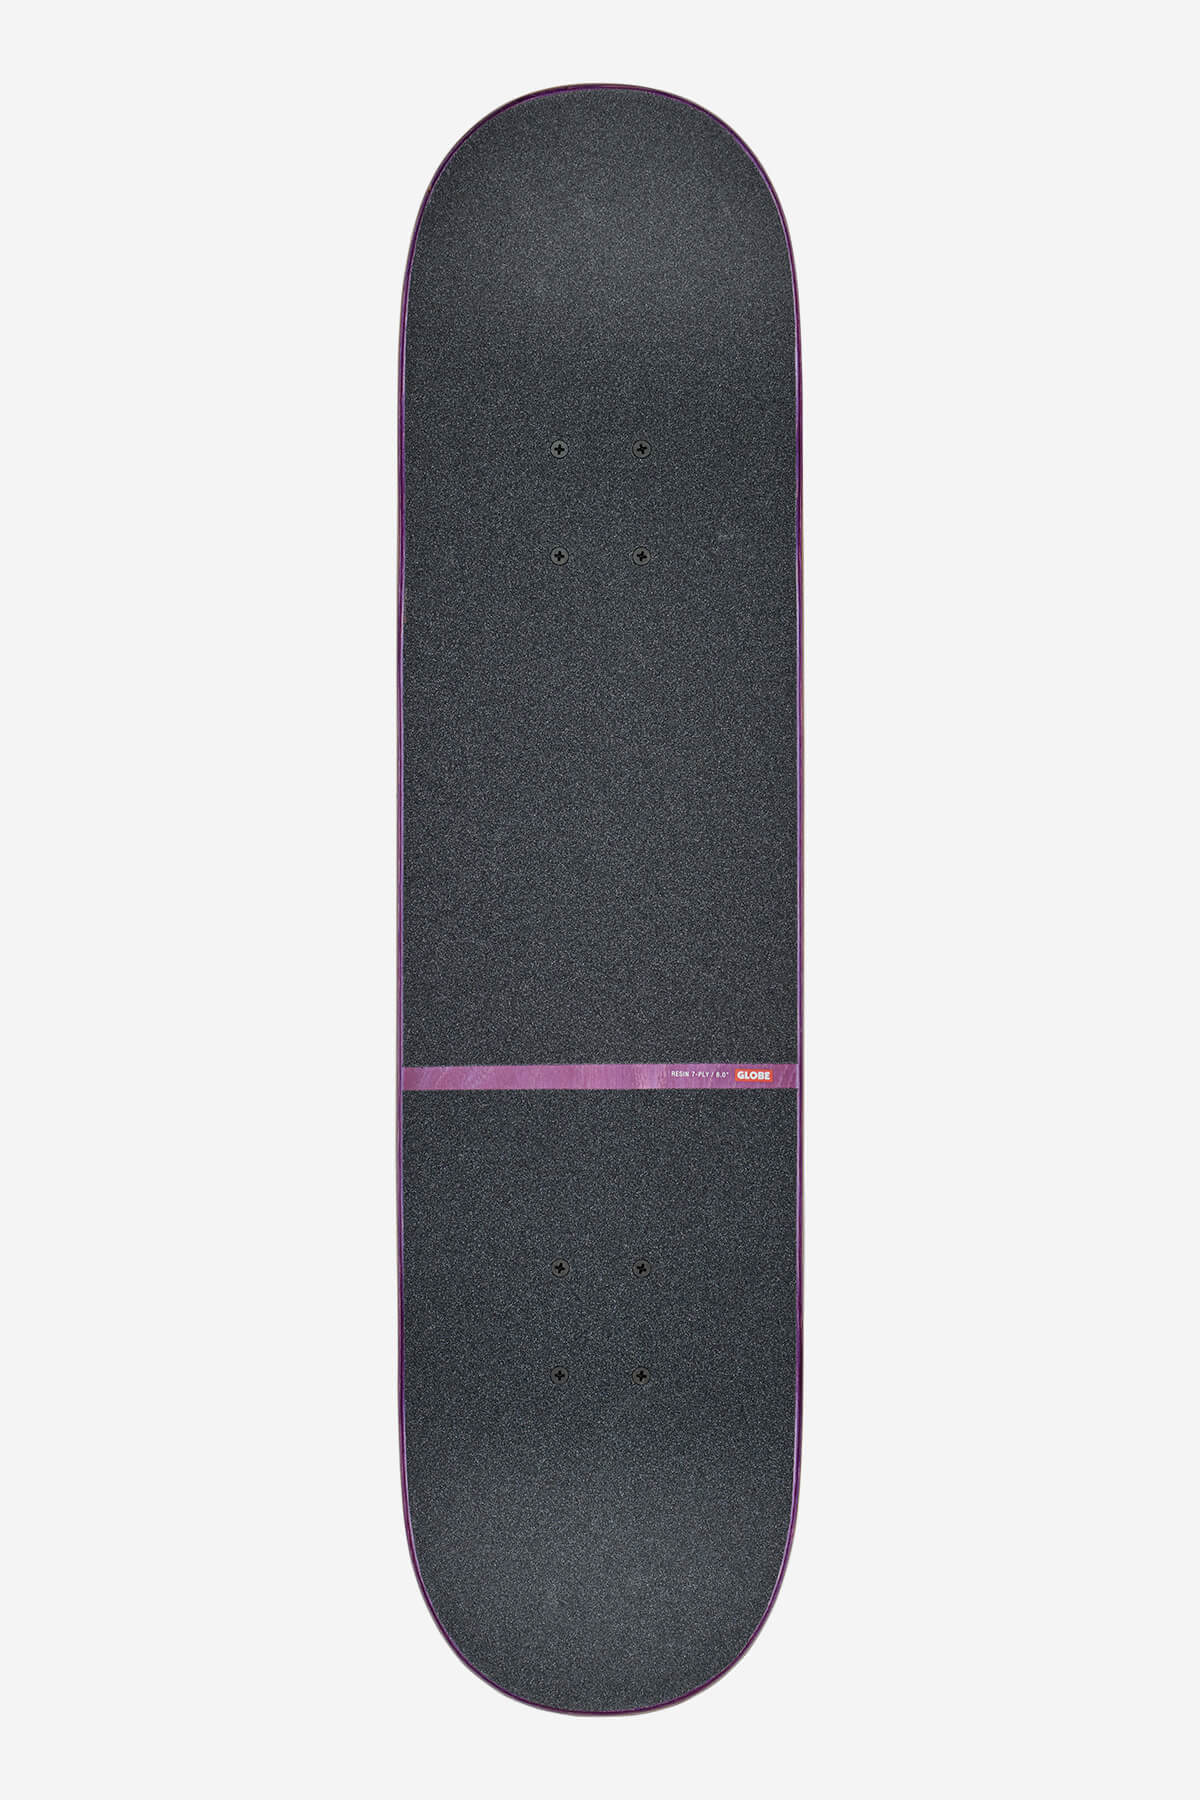 Globe - G1 Orbit - Super Natural - 8.0" Complete Skateboard